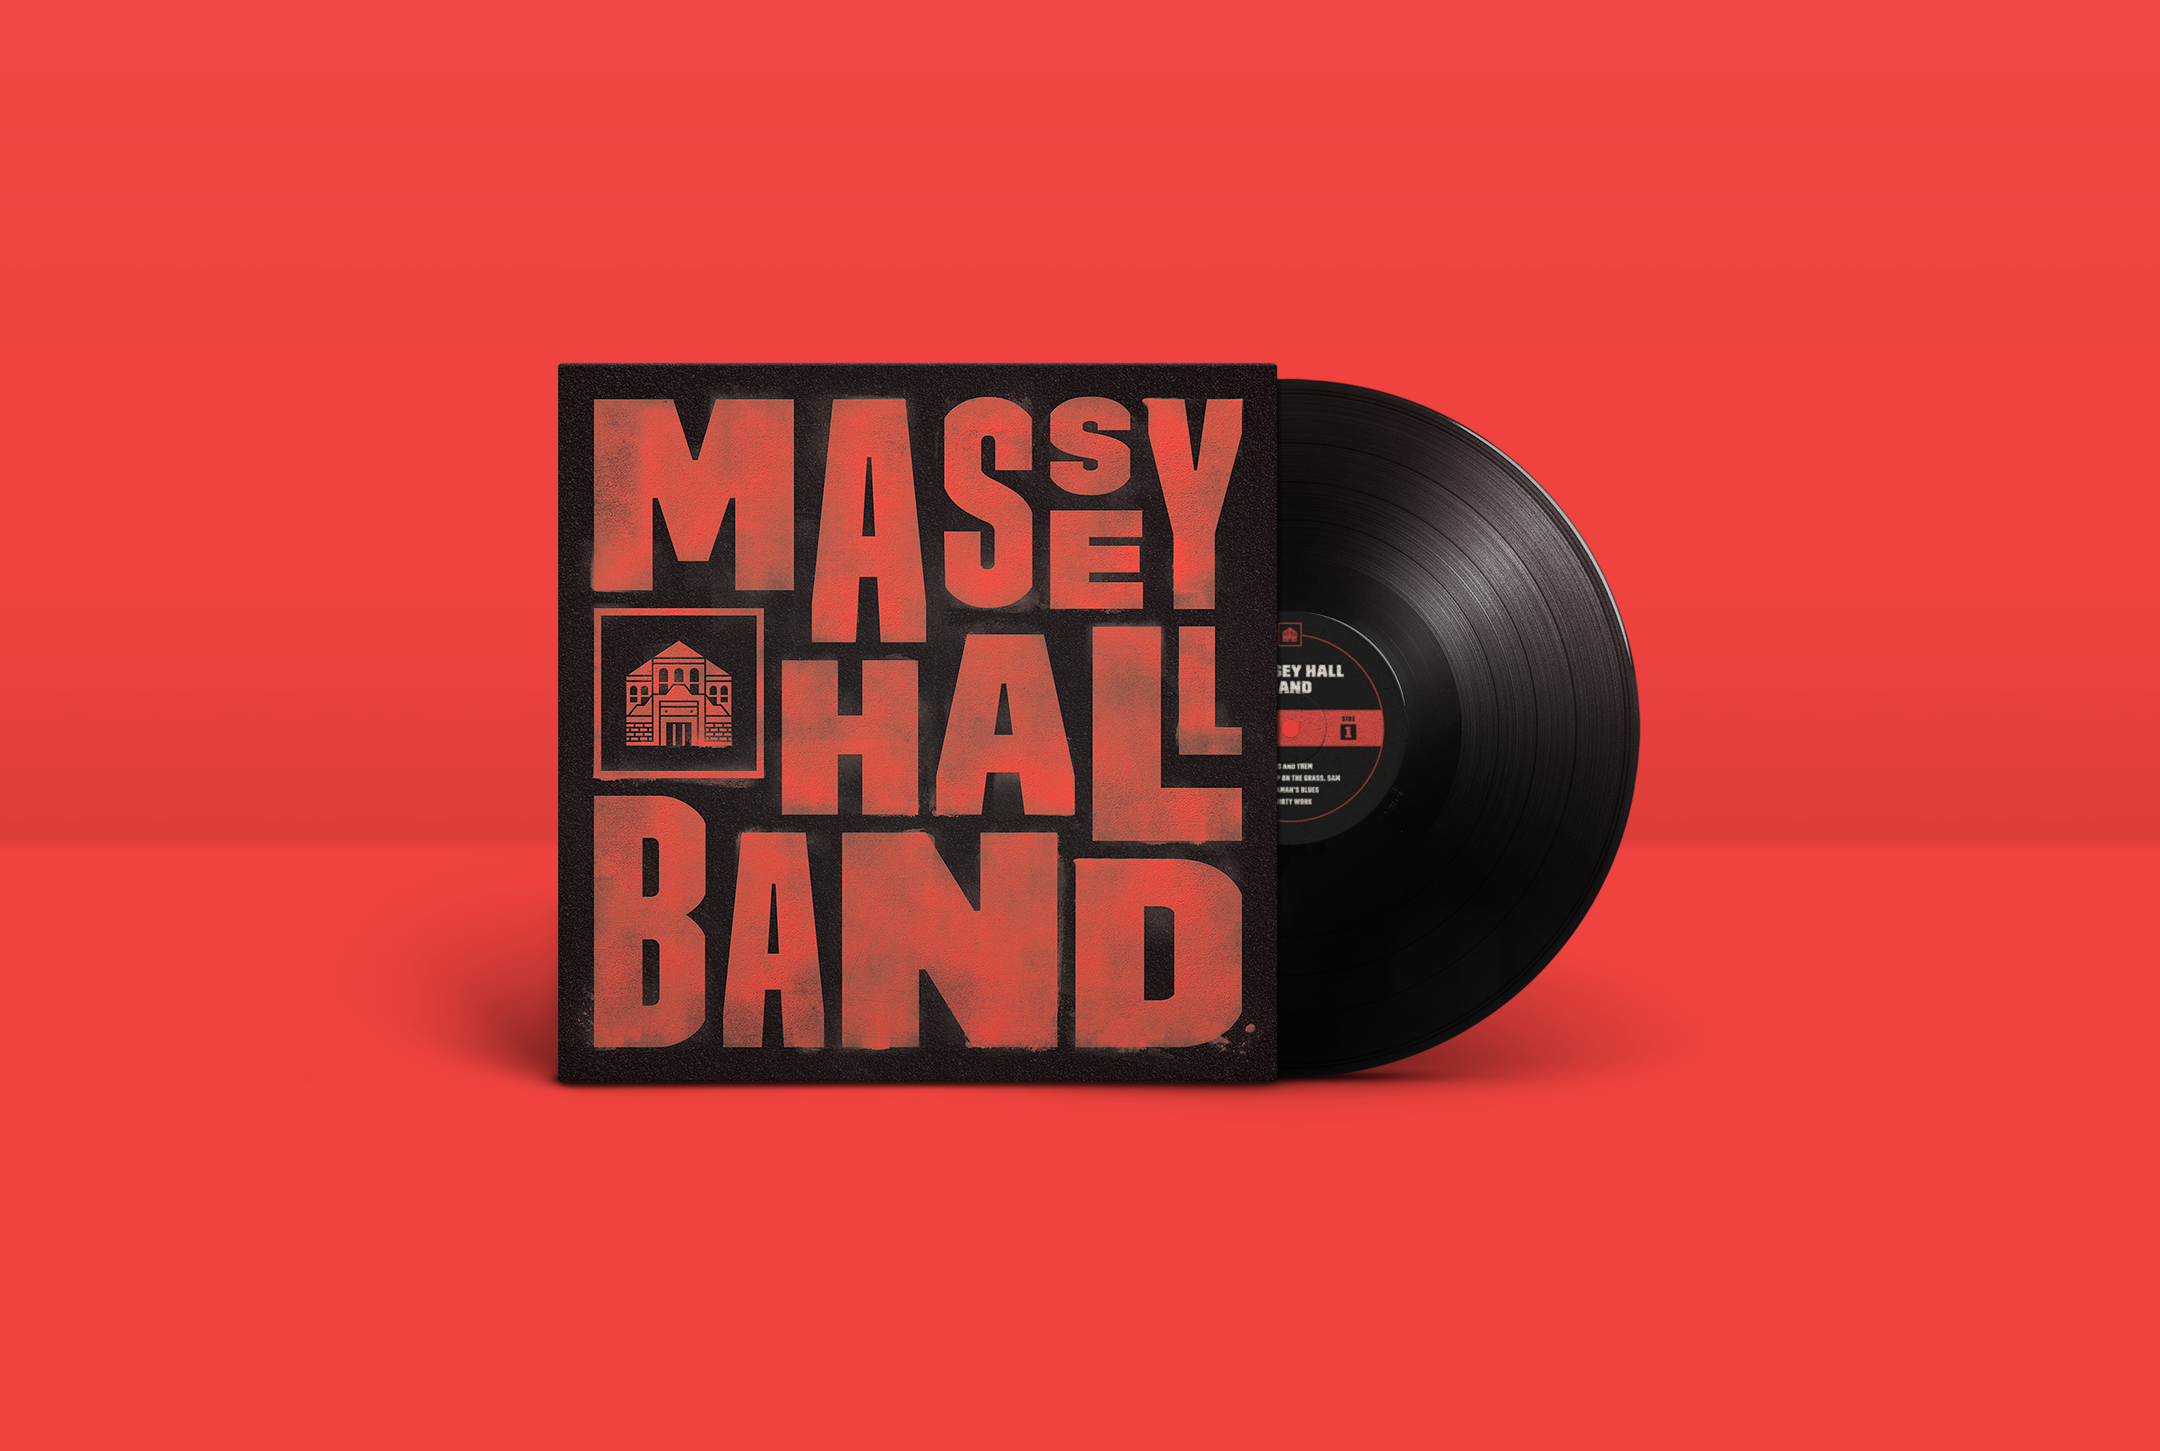 Massey Hall Band Branding